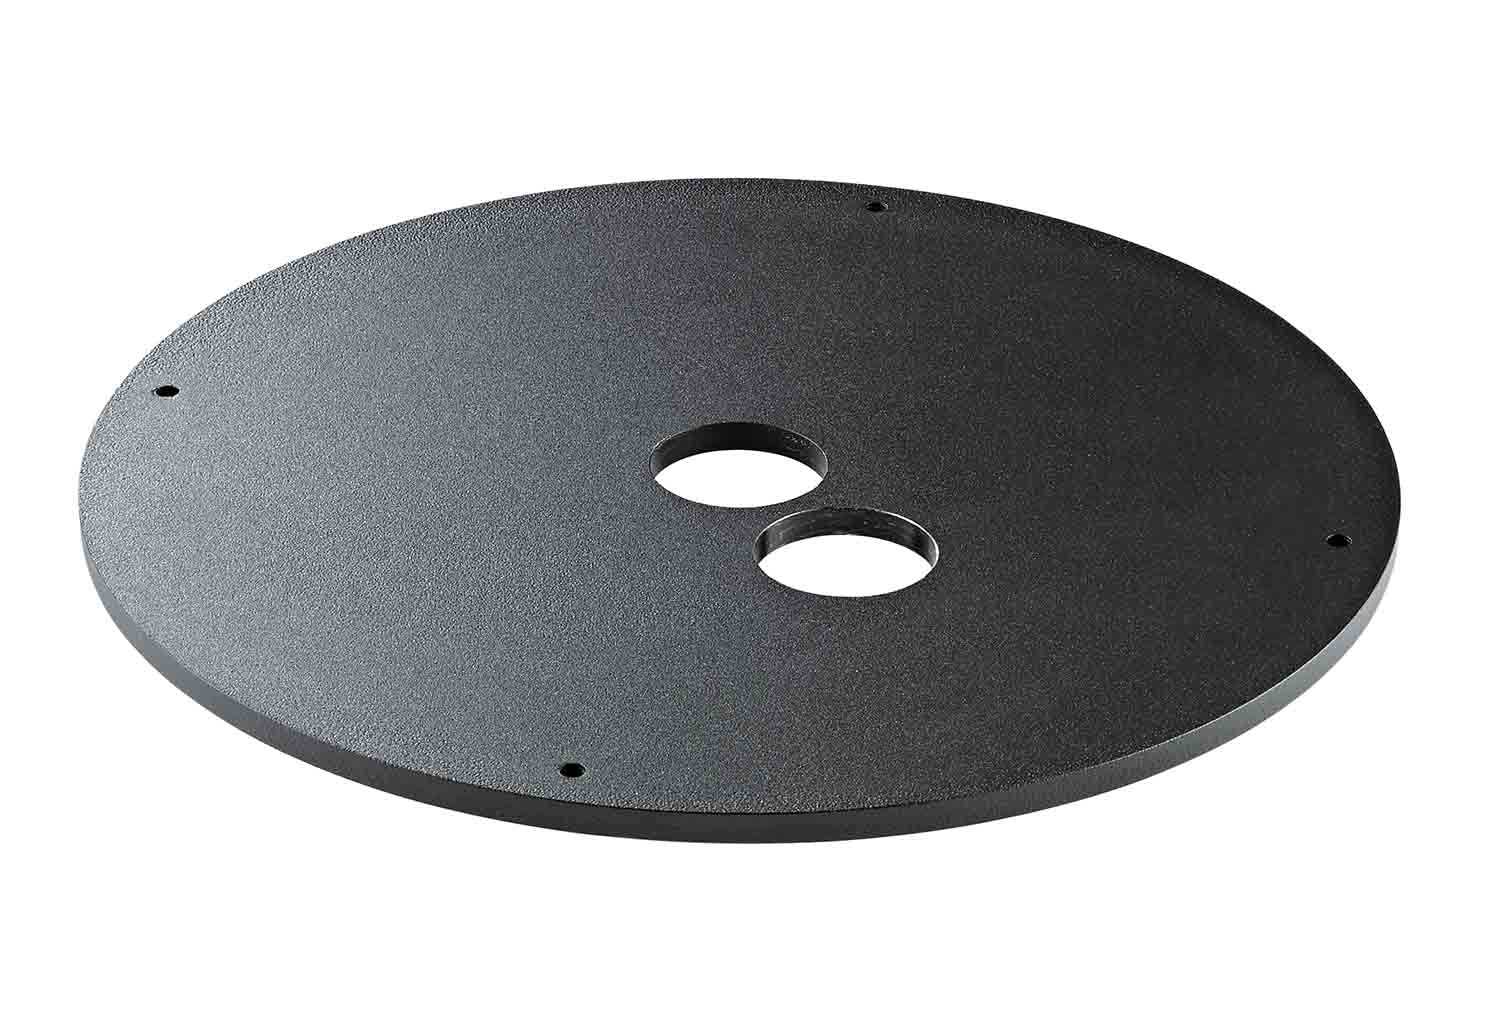 K&M 26709 Additional Weight Plate for Speaker Base - Black - Hollywood DJ